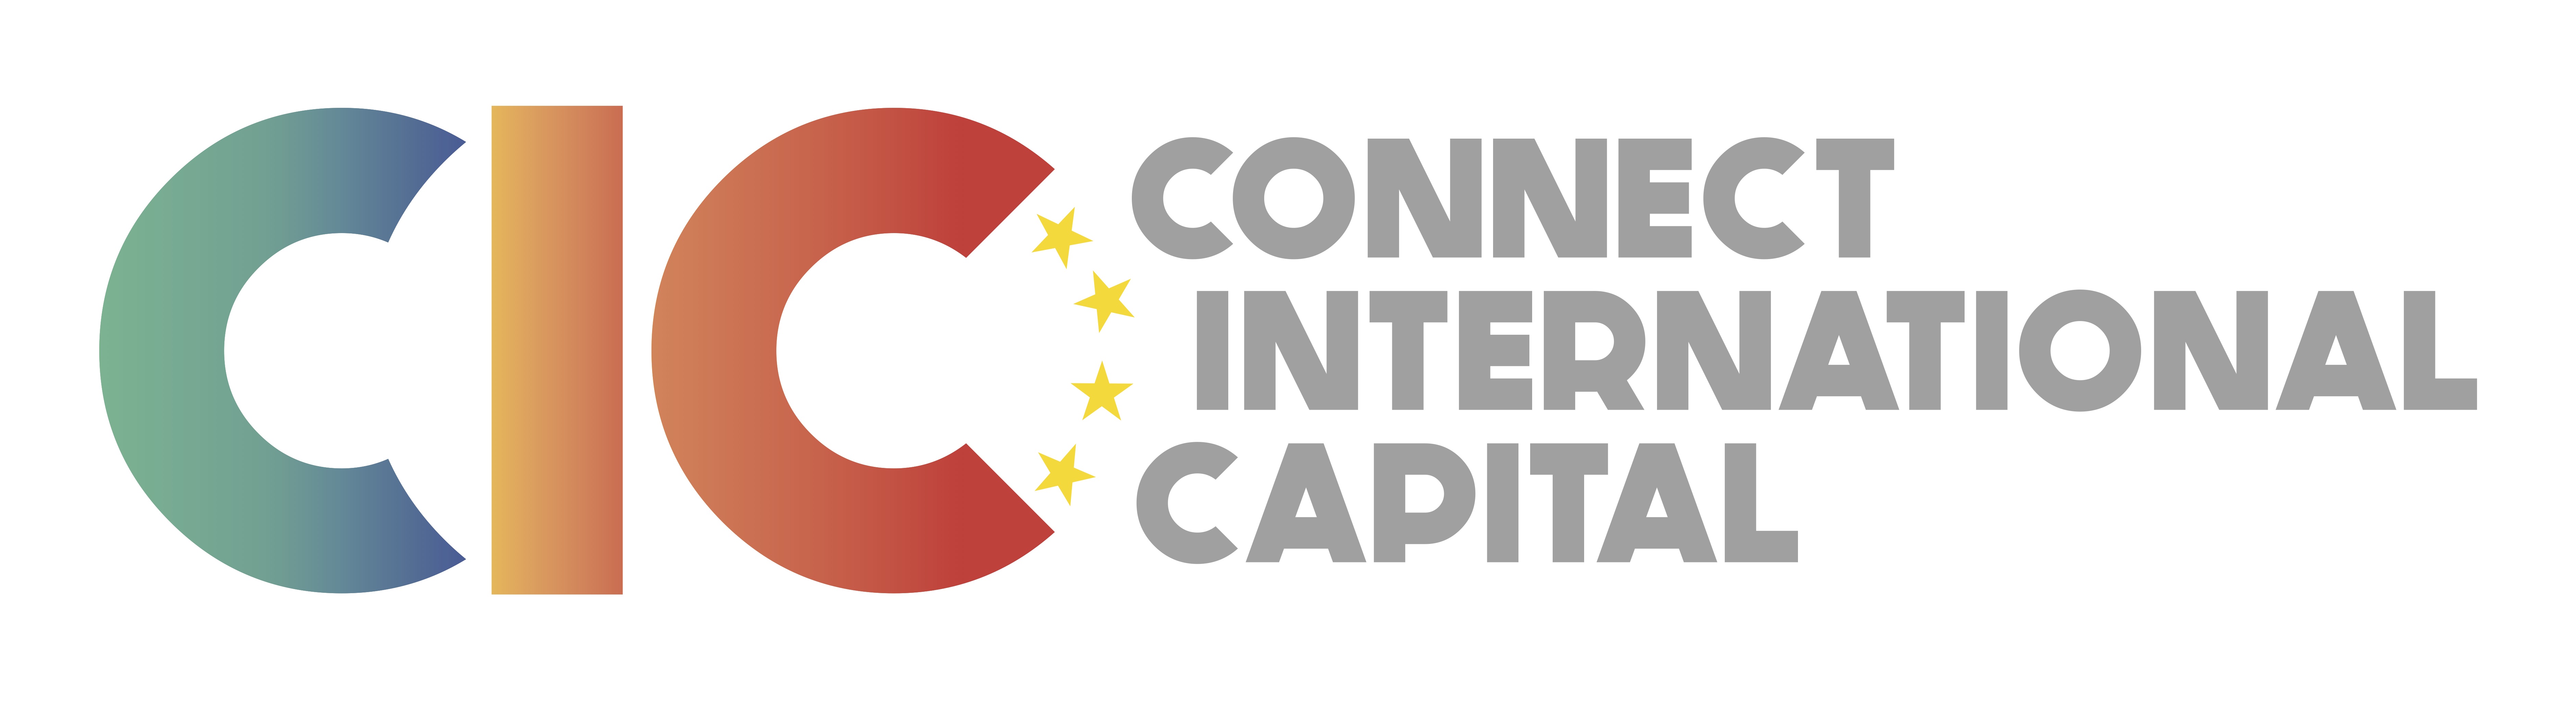 Connect International Capital Logo